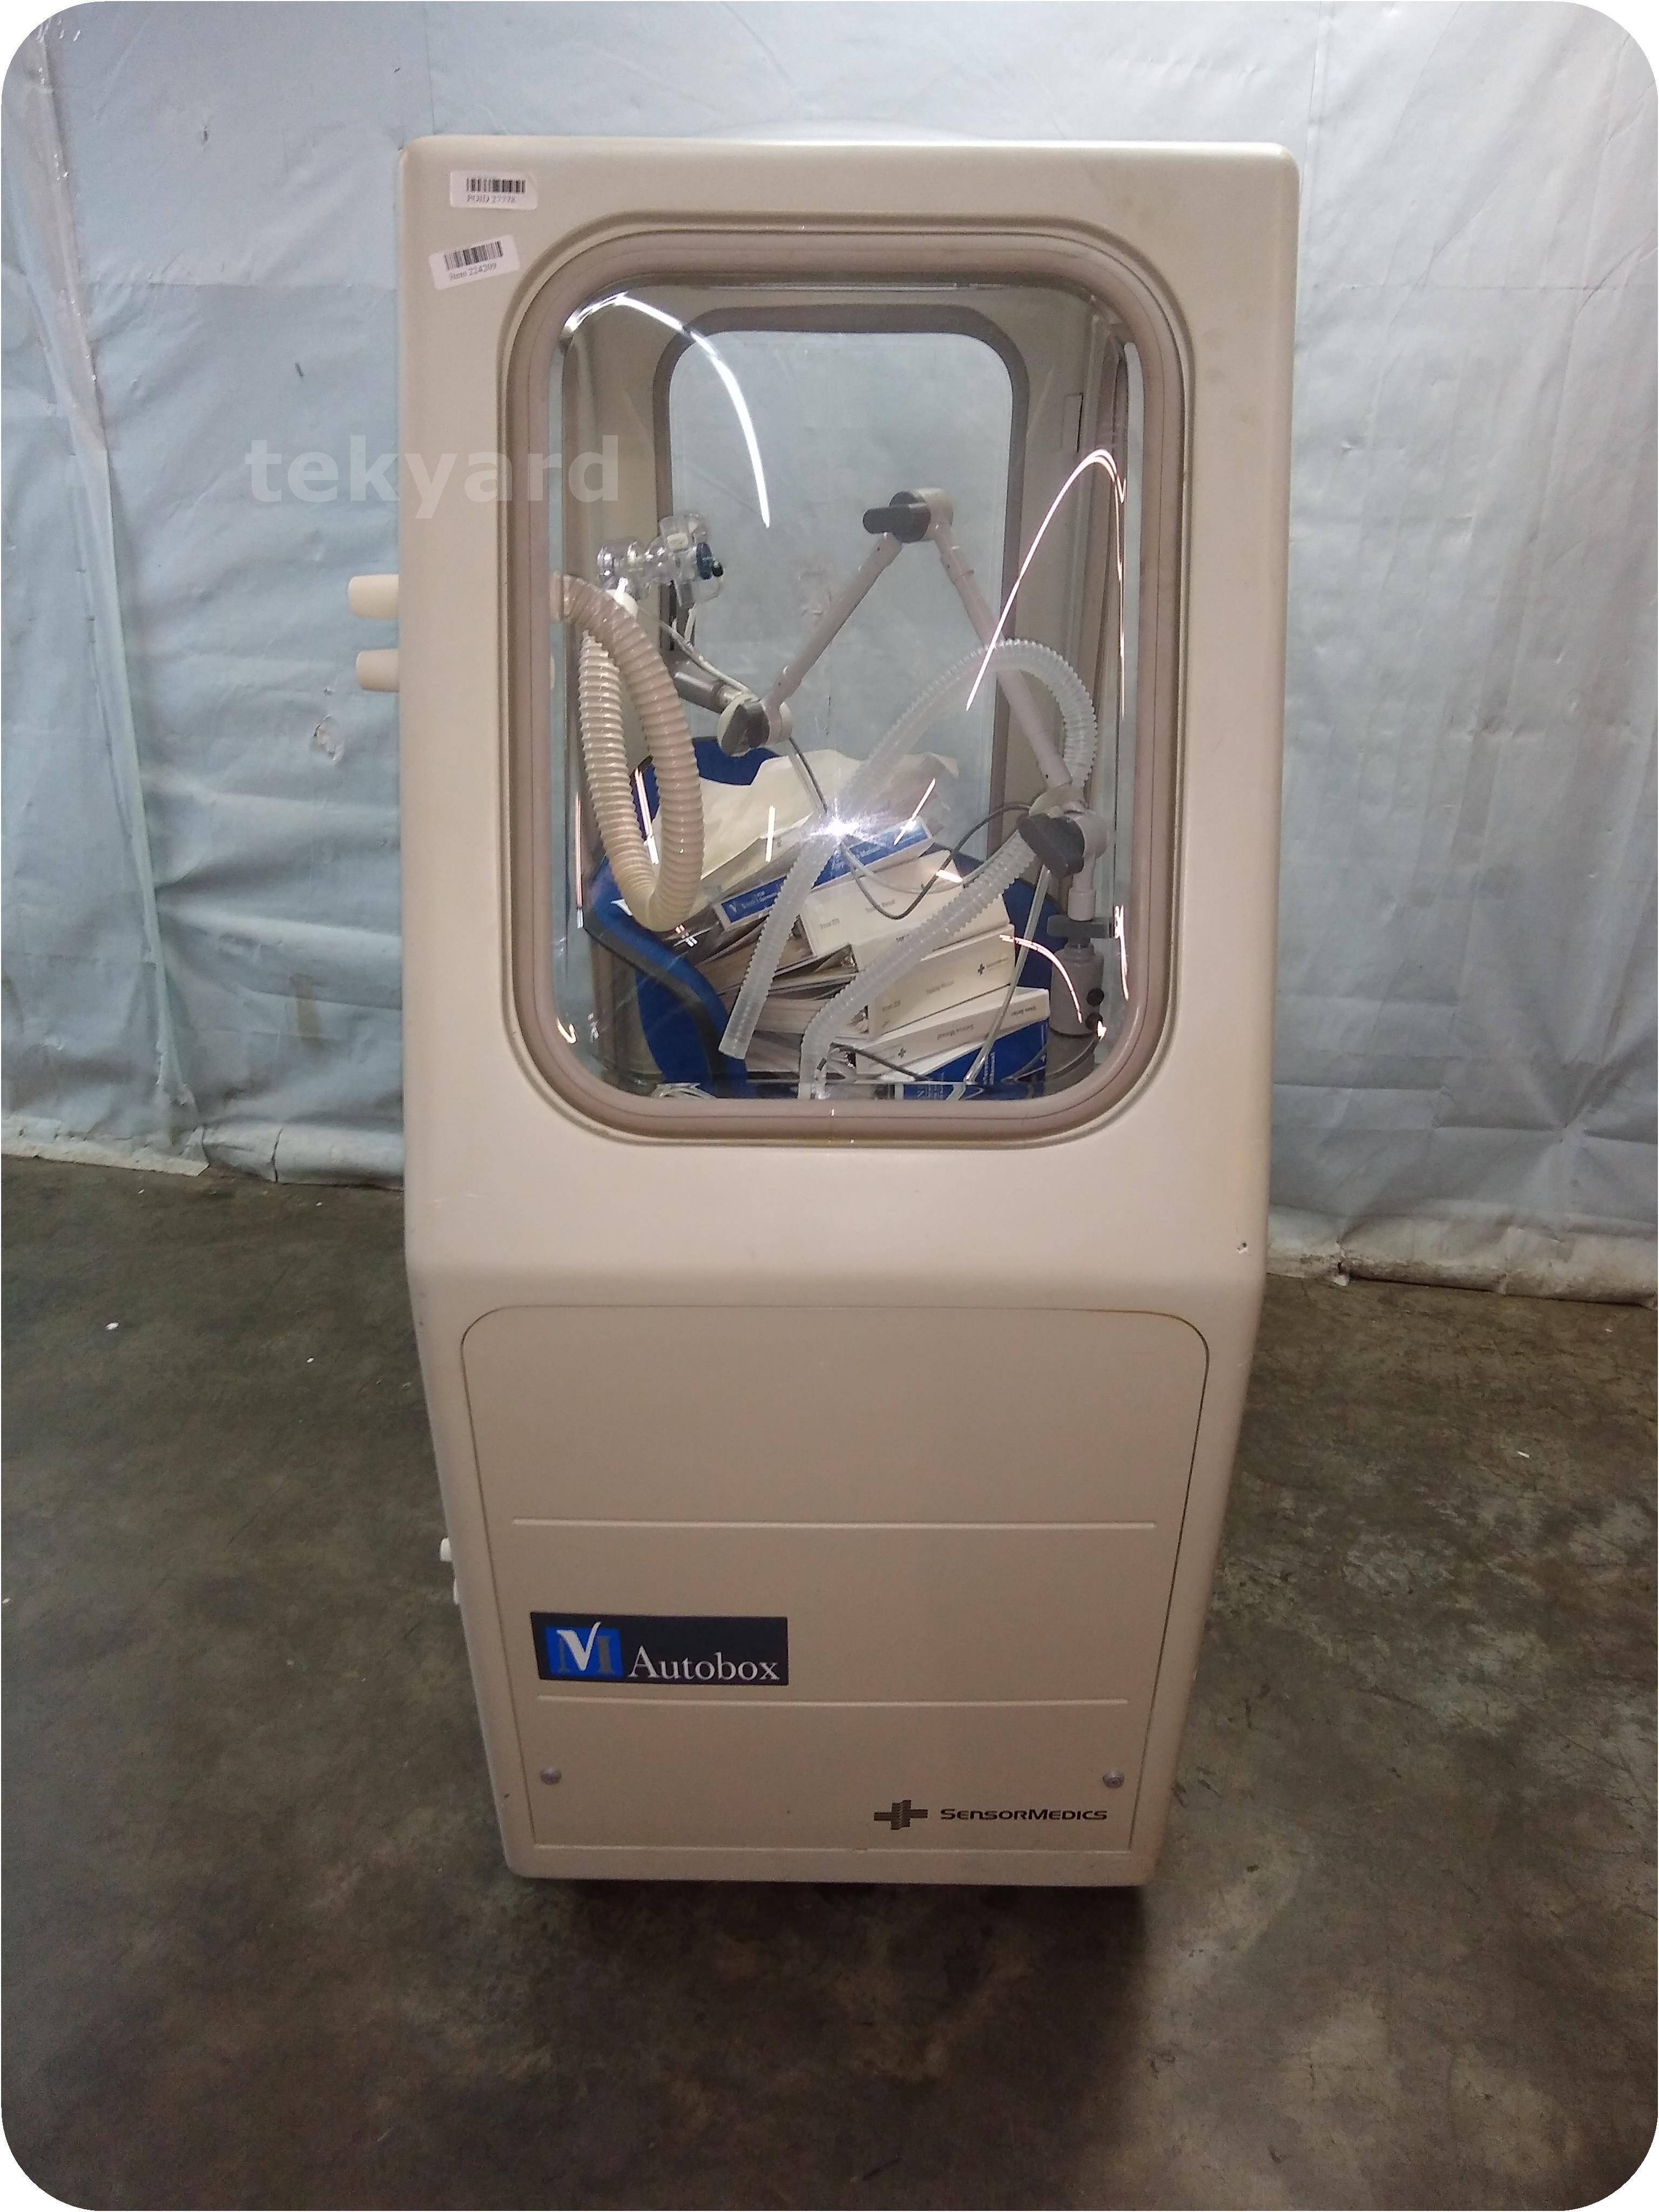 tekyard, LLC. - 224209-SensorMedics V6200 Autobox 769501-101 Plethysmograph  Respiratory Analyzer